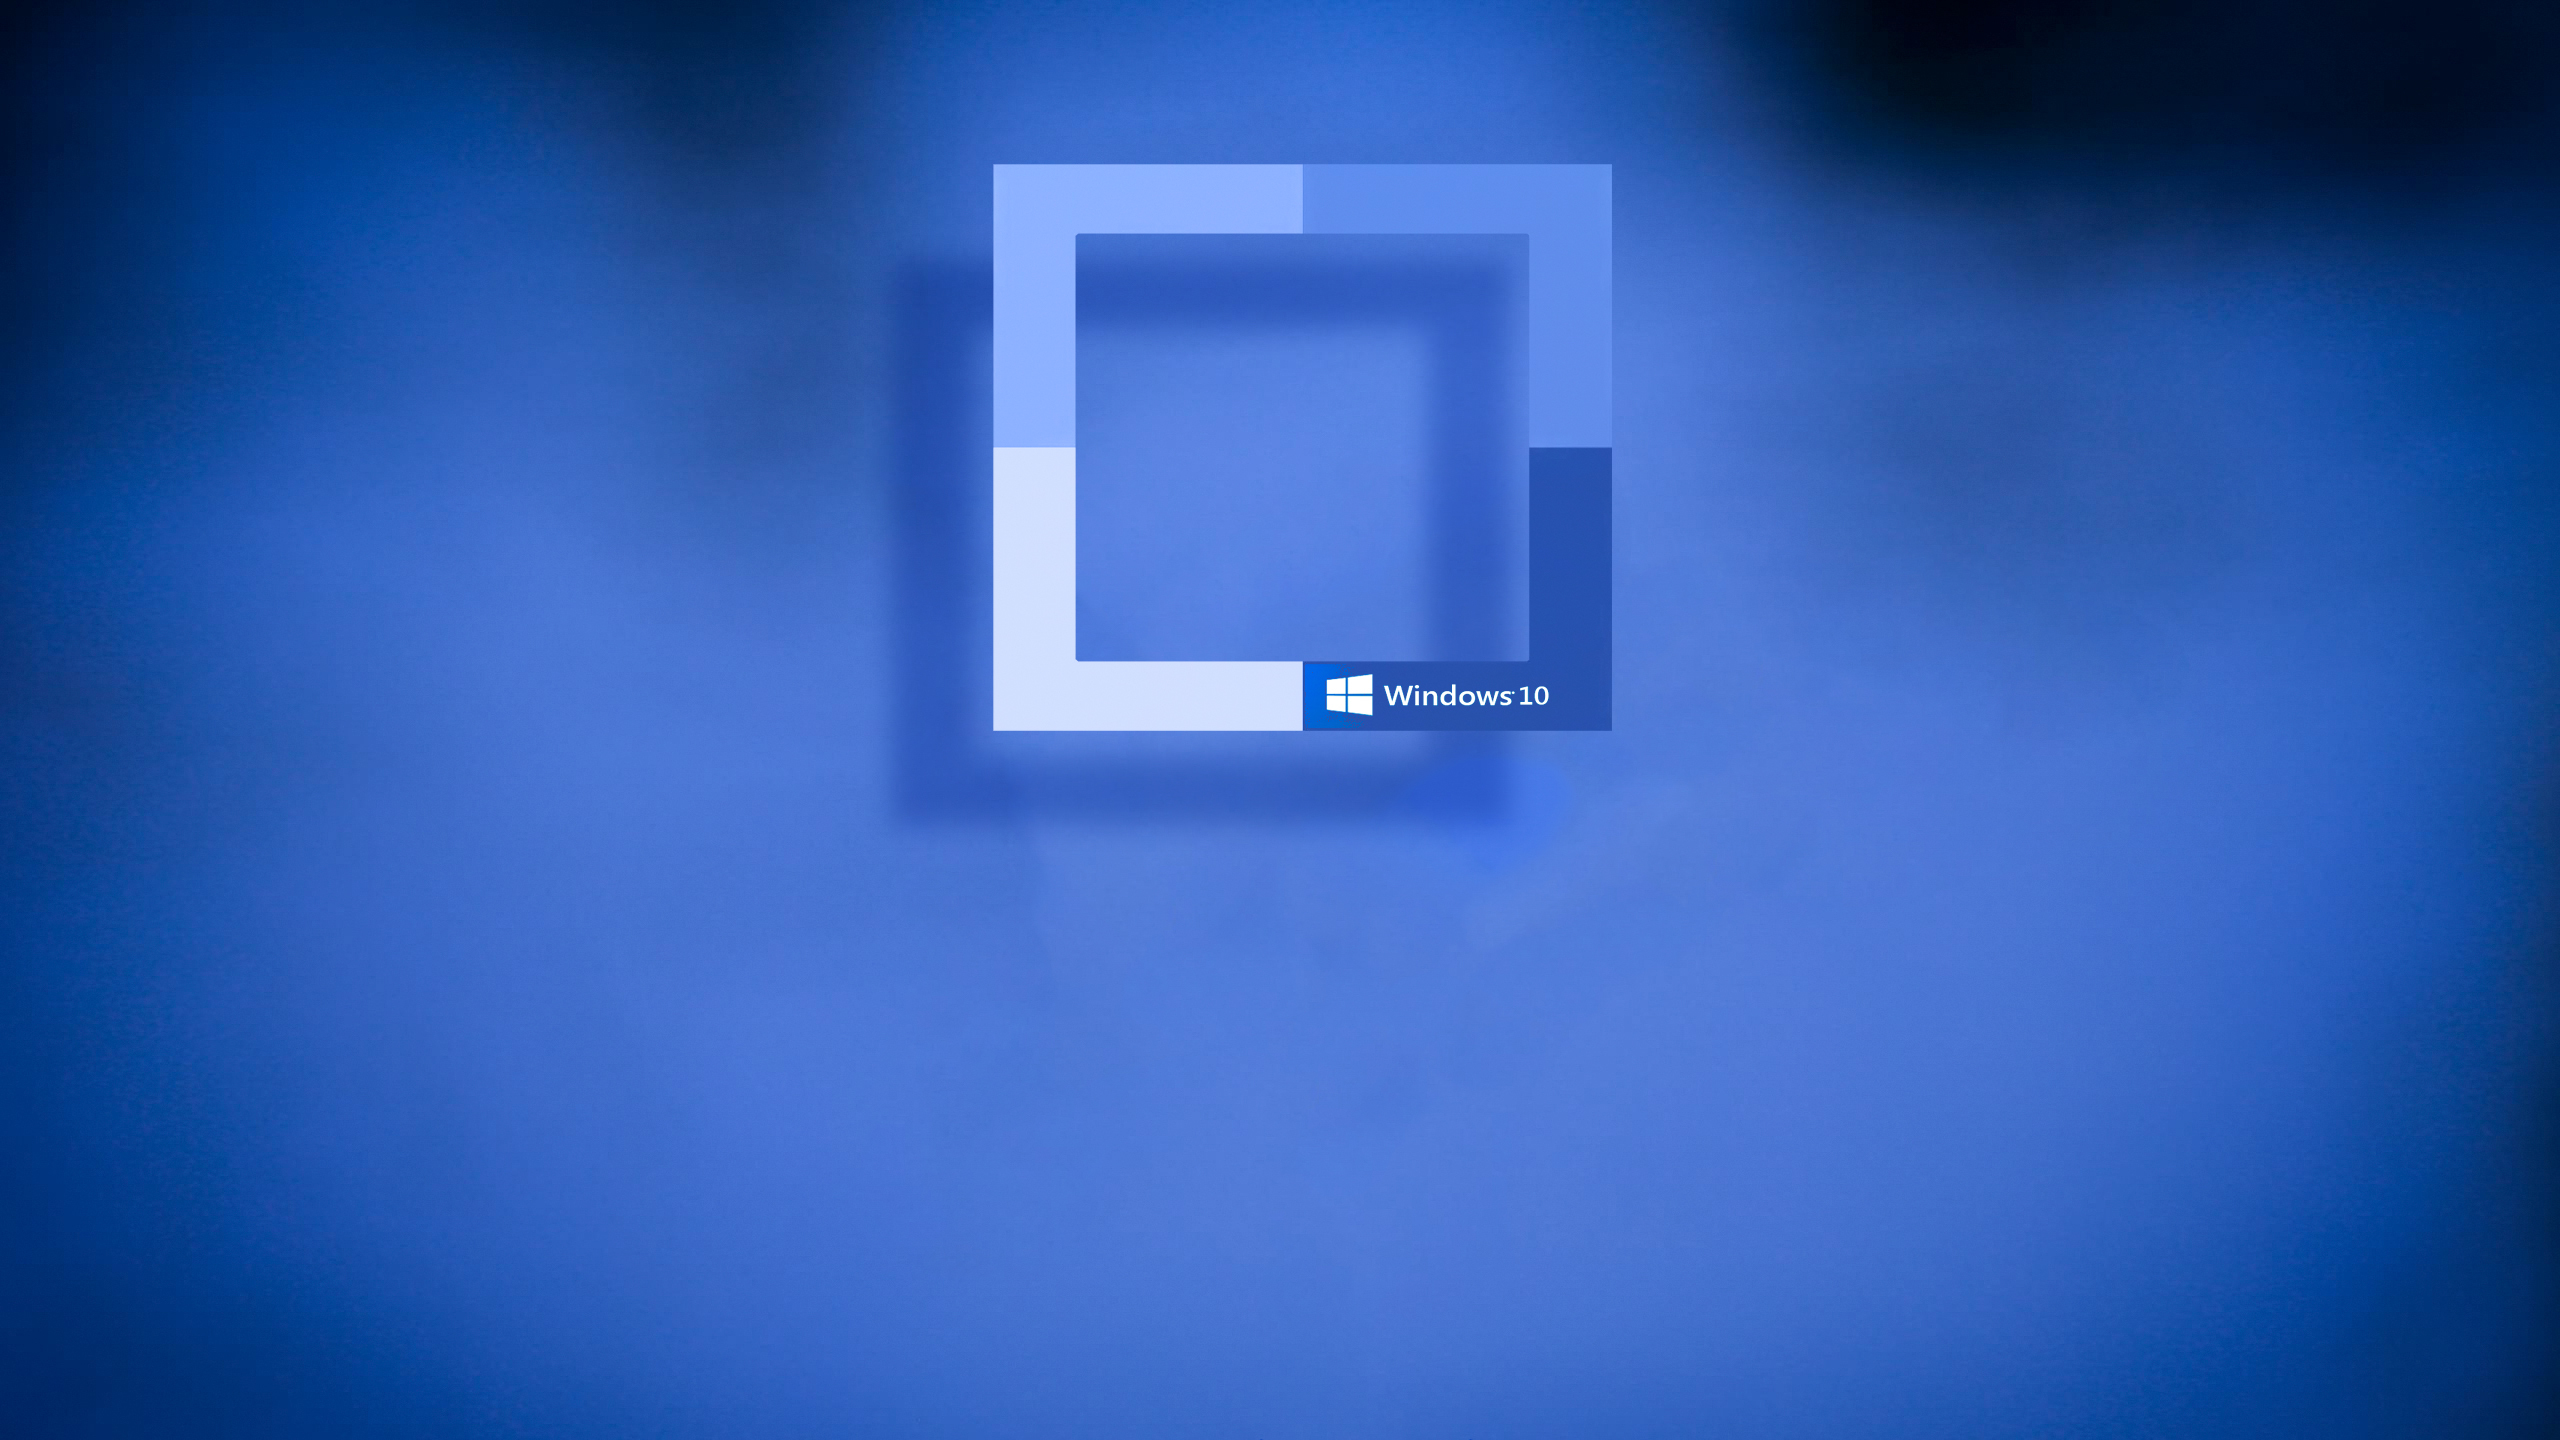 sfondi desktop hd per windows 10,blu,testo,blu elettrico,blu cobalto,font